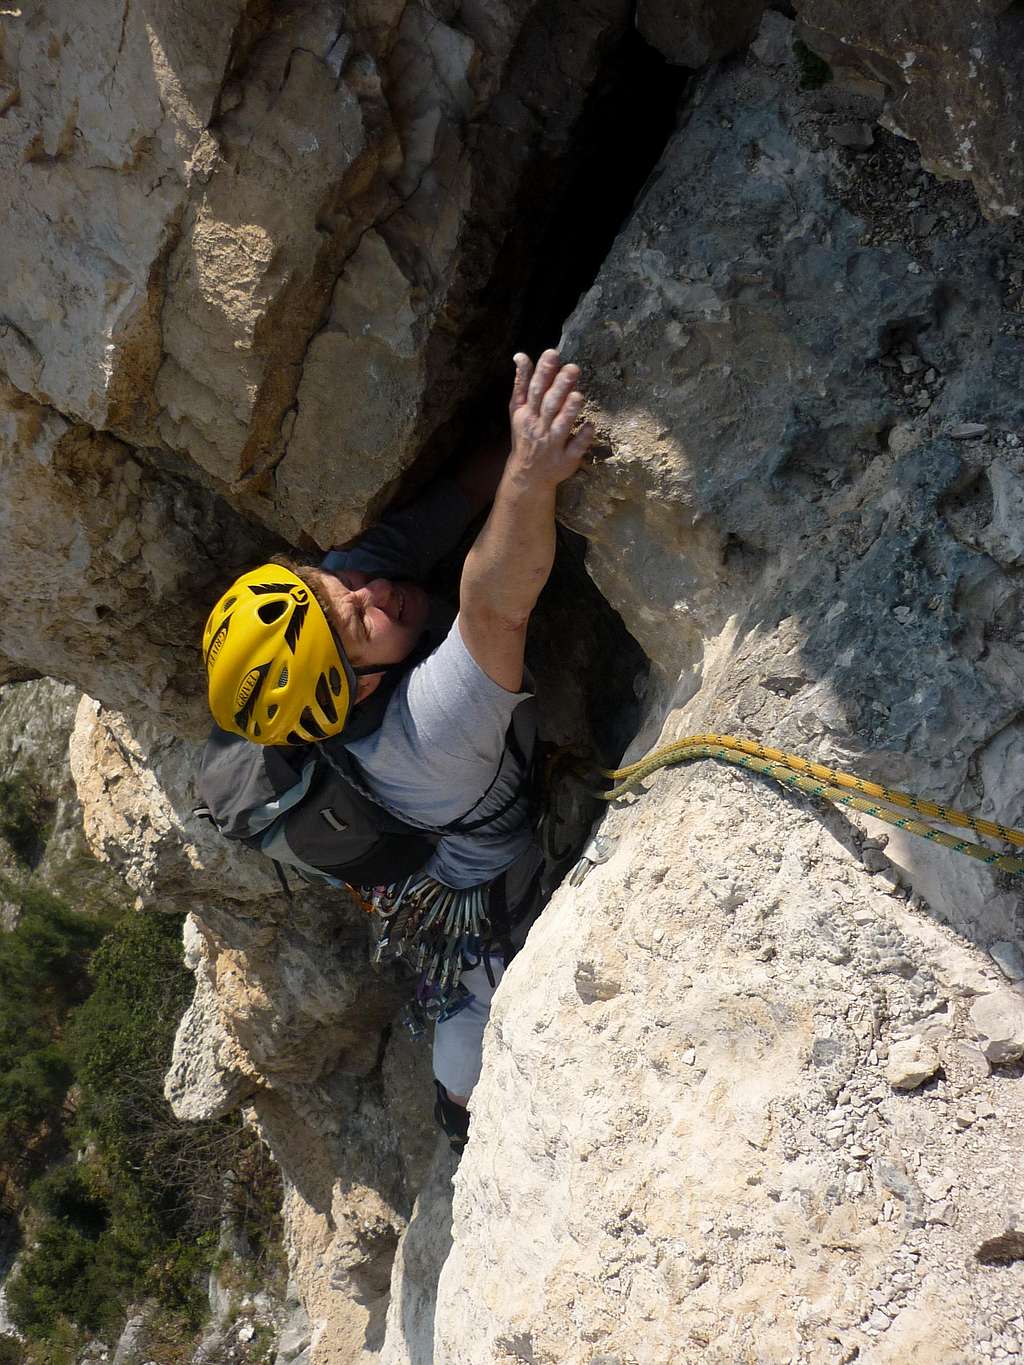 Climbing on the route Archai, Coste dell'Anglone, Valle del Sarca